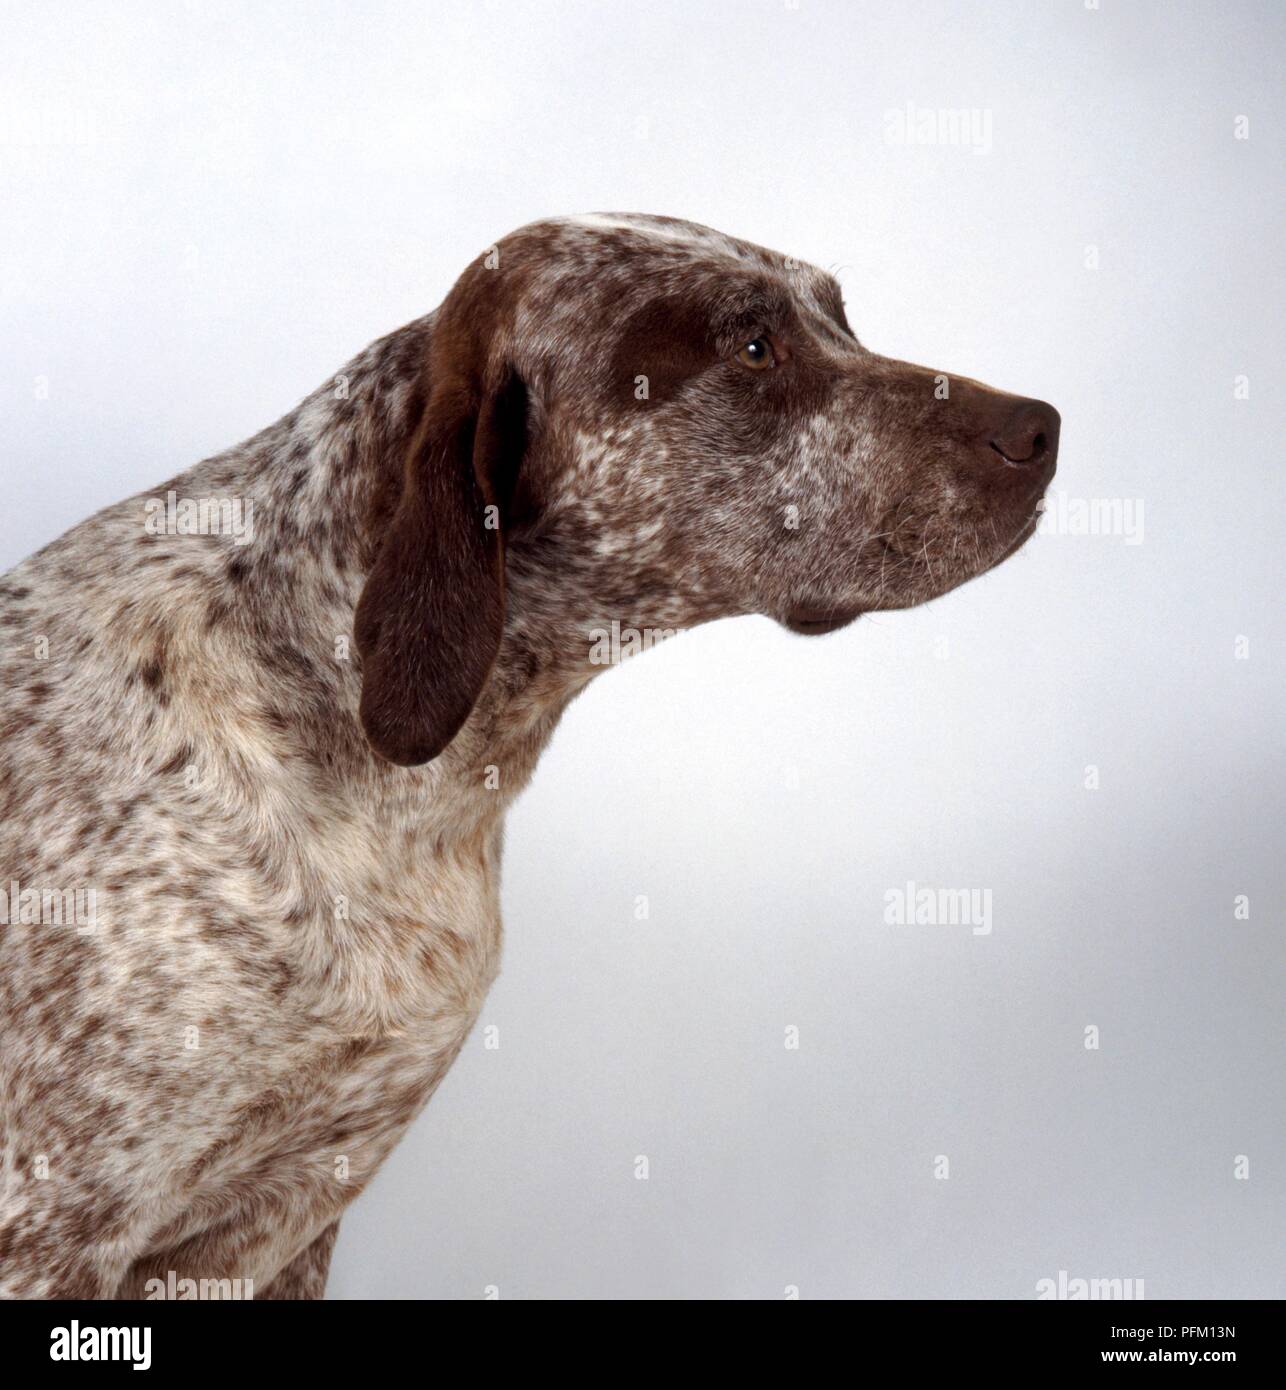 Braque Du Bourbonnais dog with head in profile Stock Photo